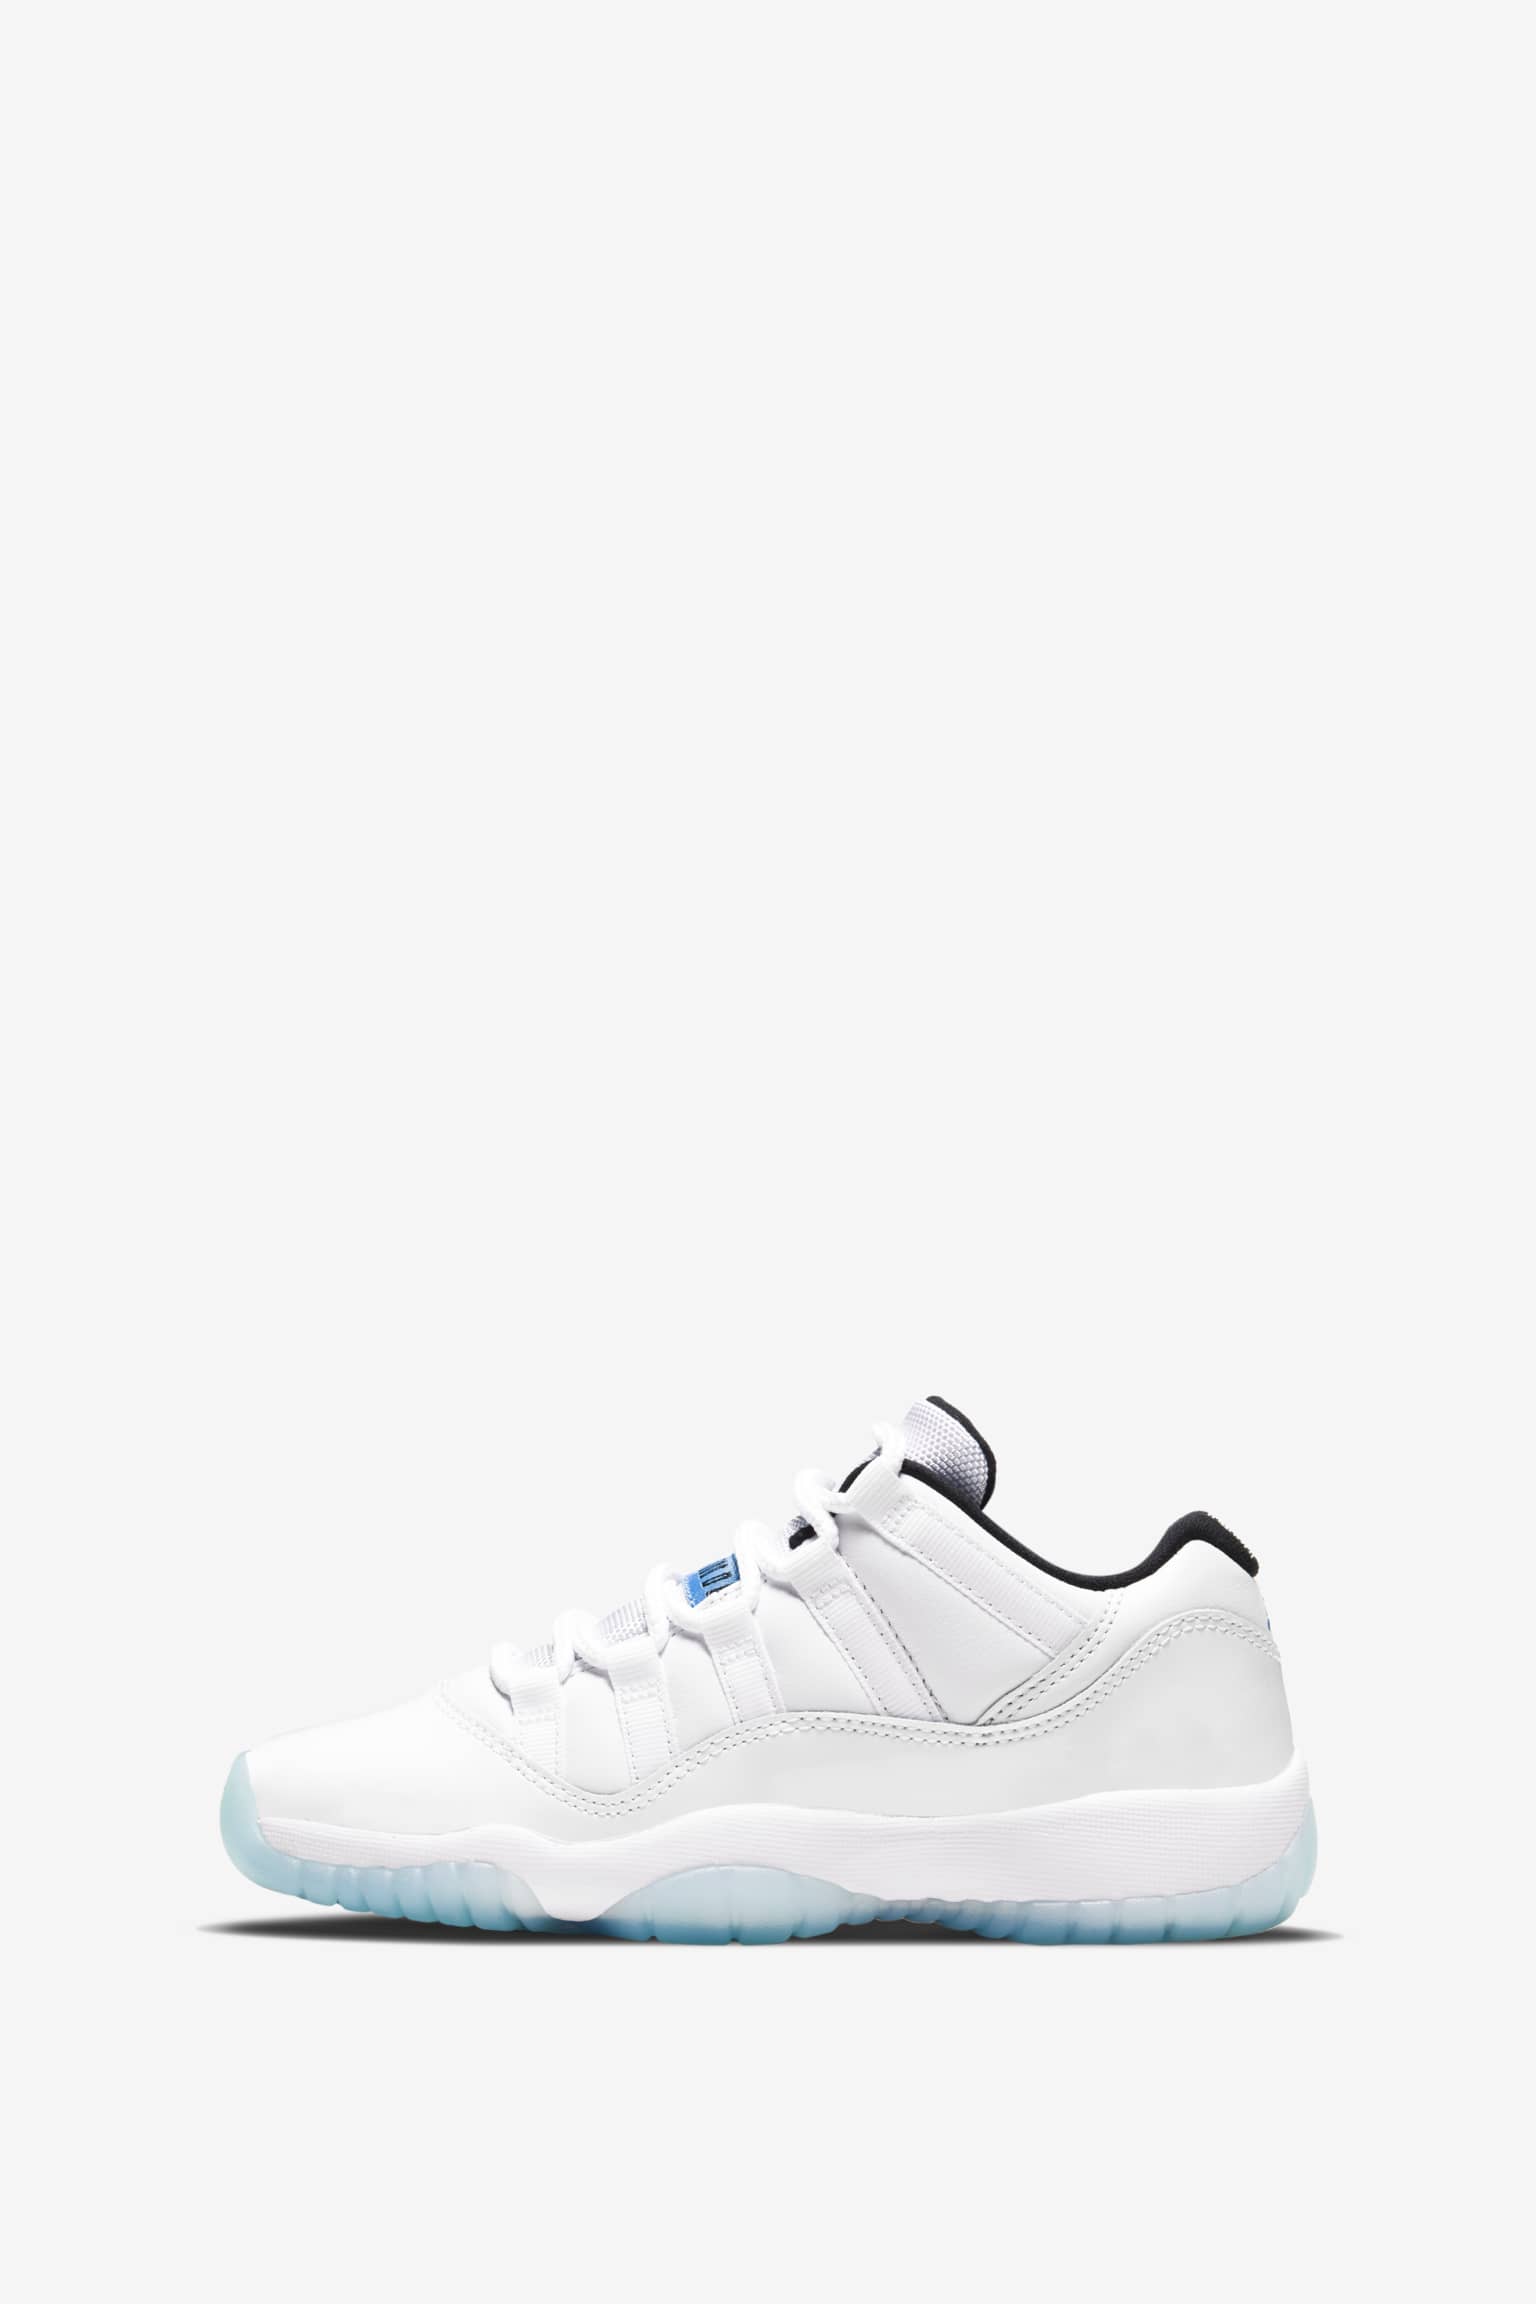 Air Jordan 11 Low 'Legend Blue' Release Date. Nike SNKRS MY